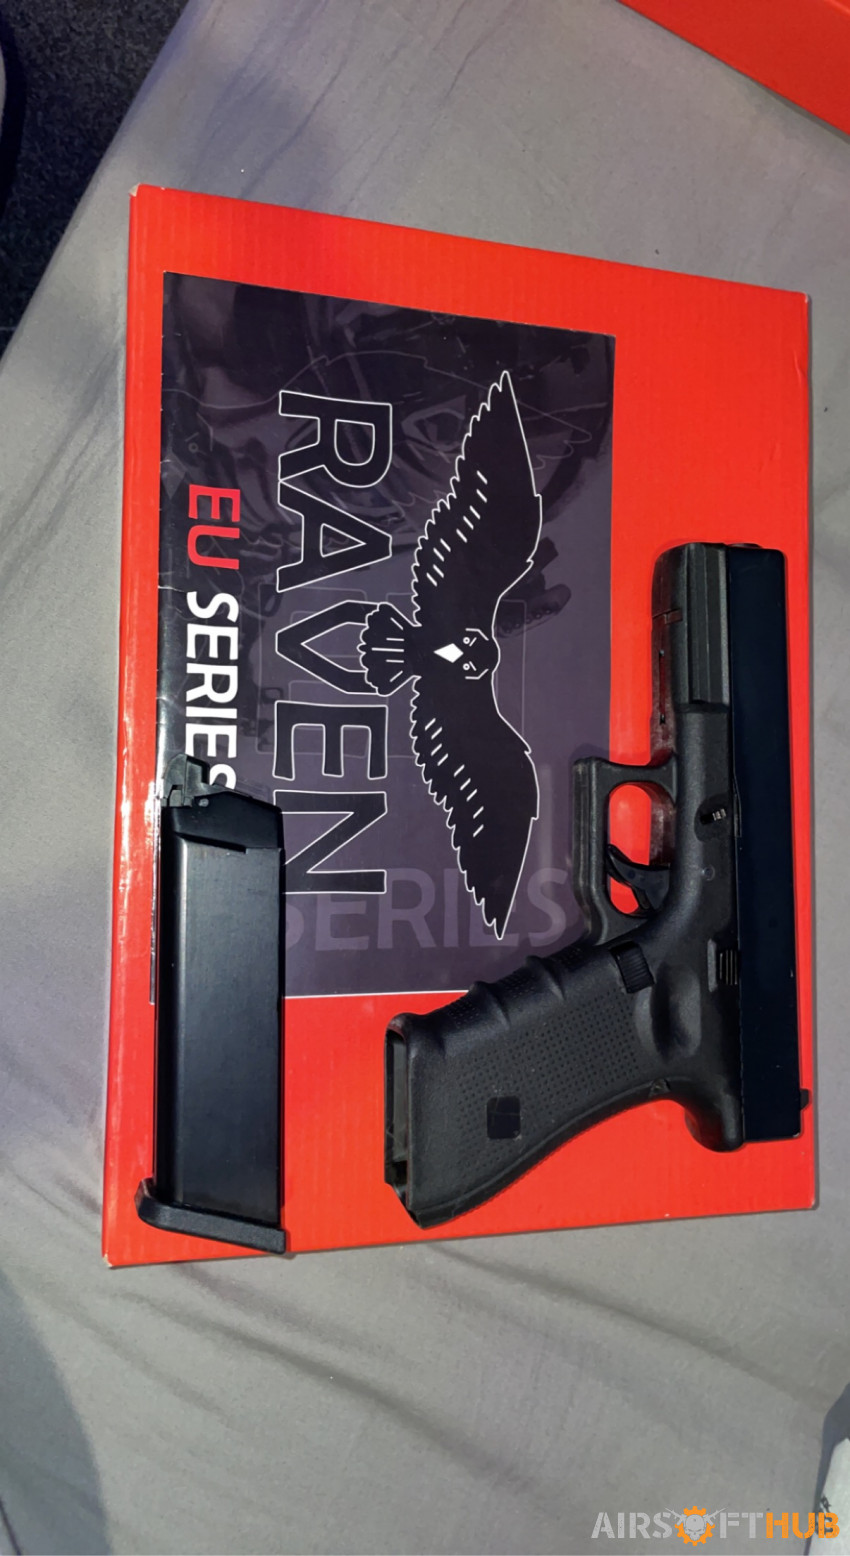 Raven Glock - Used airsoft equipment